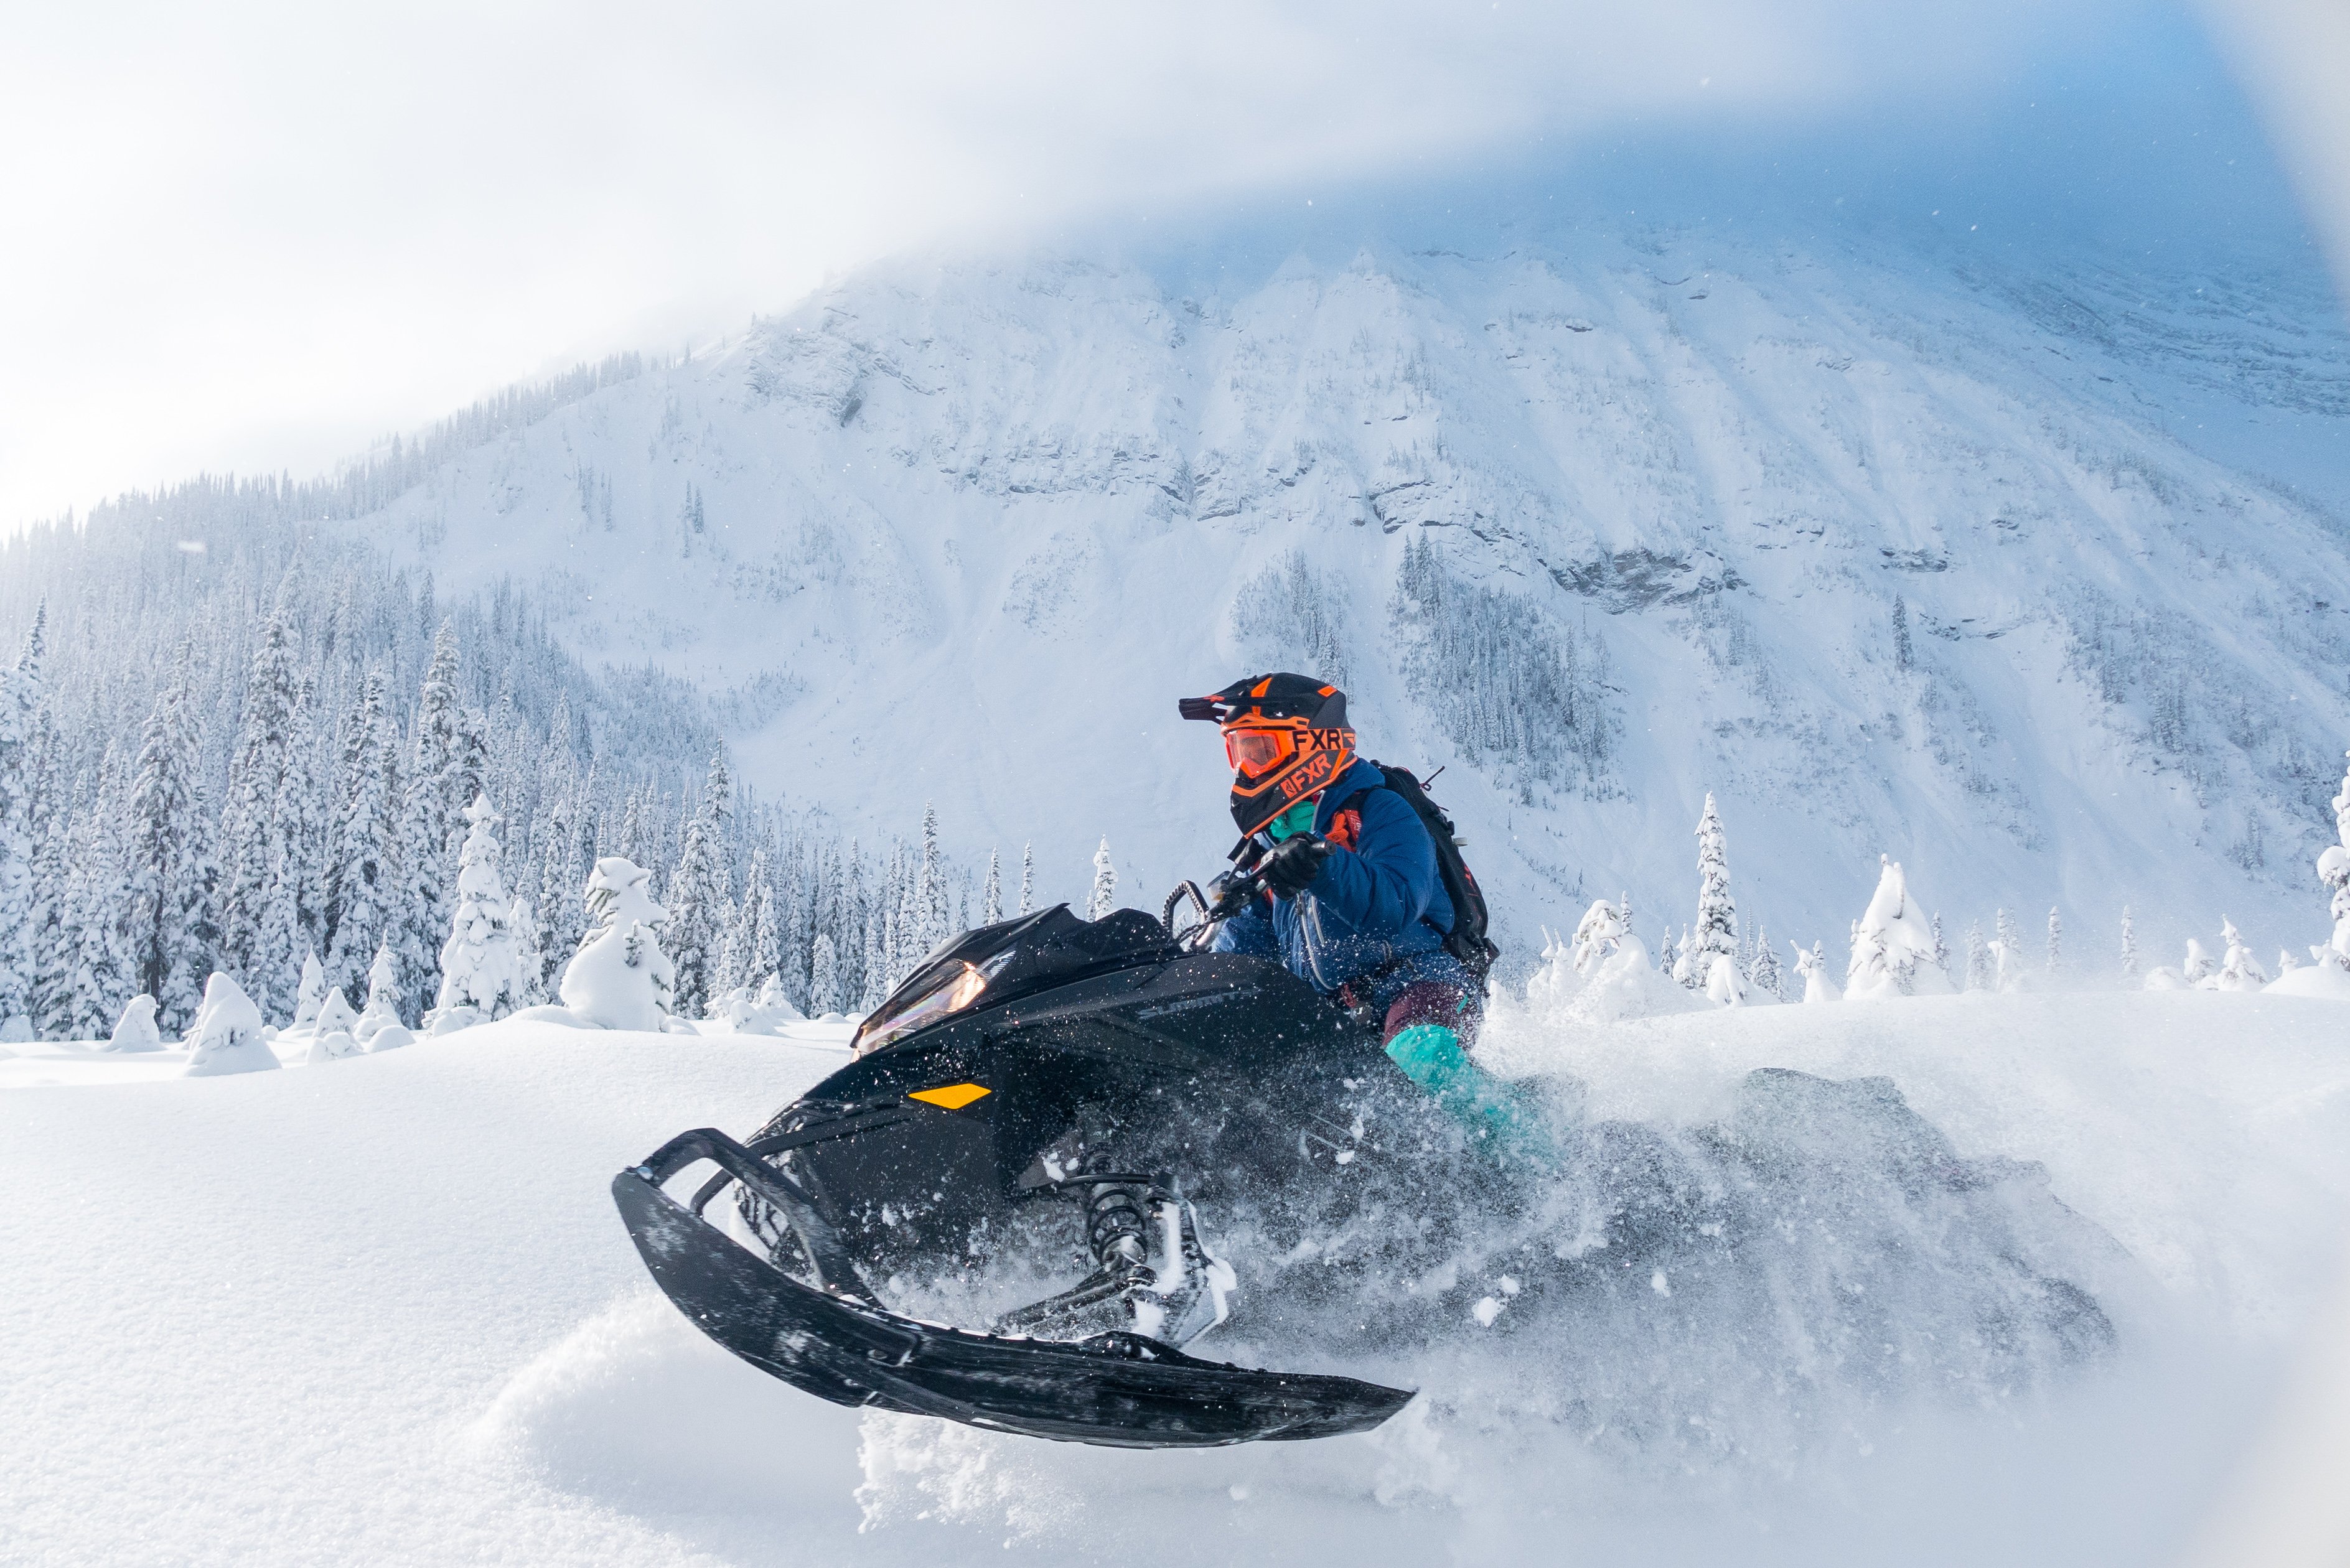 A person rides a snowmobile through the deep snow in the mountains